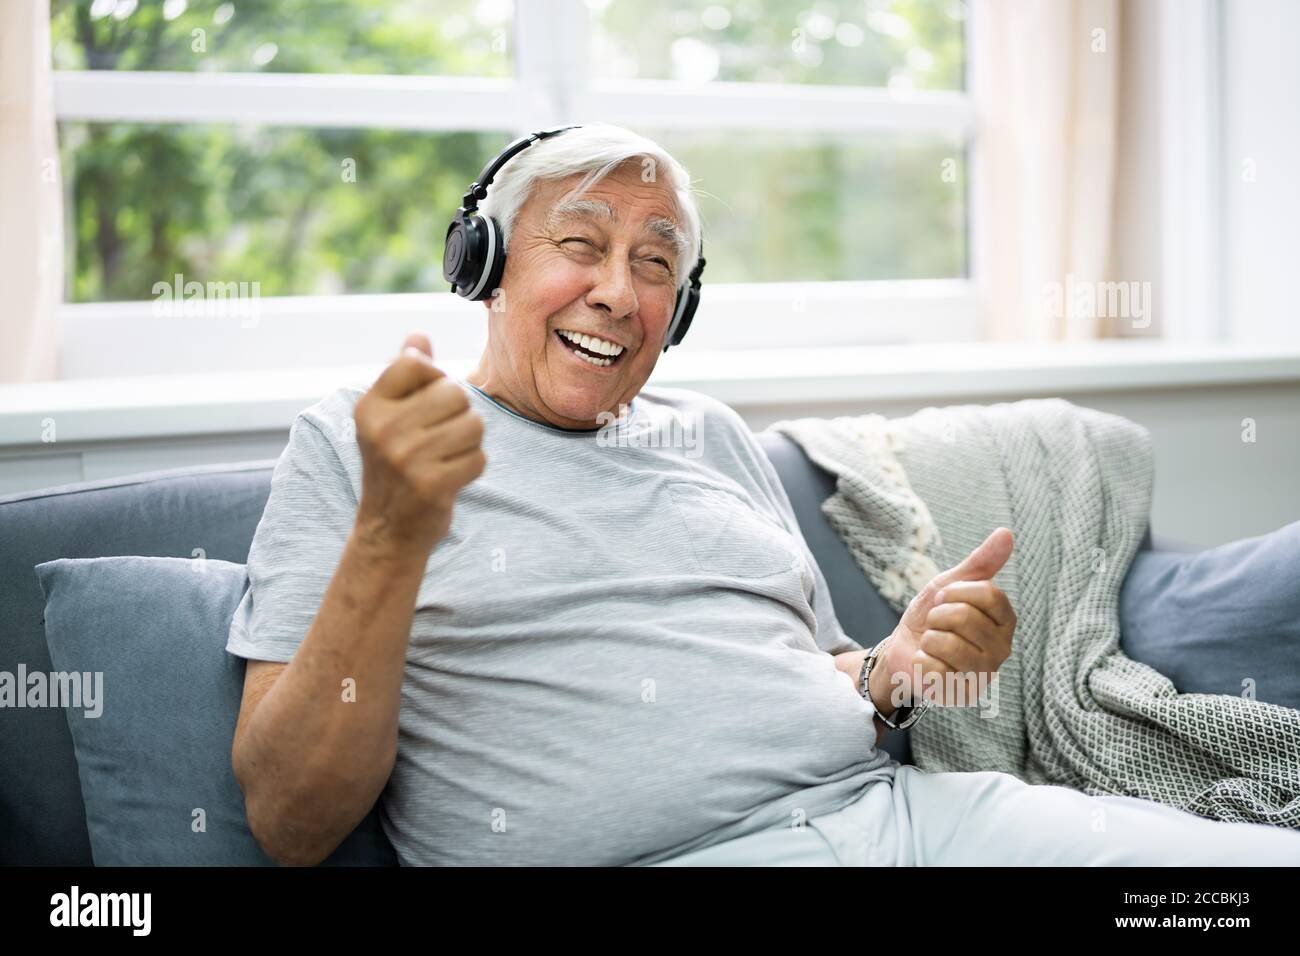 persona mayor sonriendo usando audifonos modernos